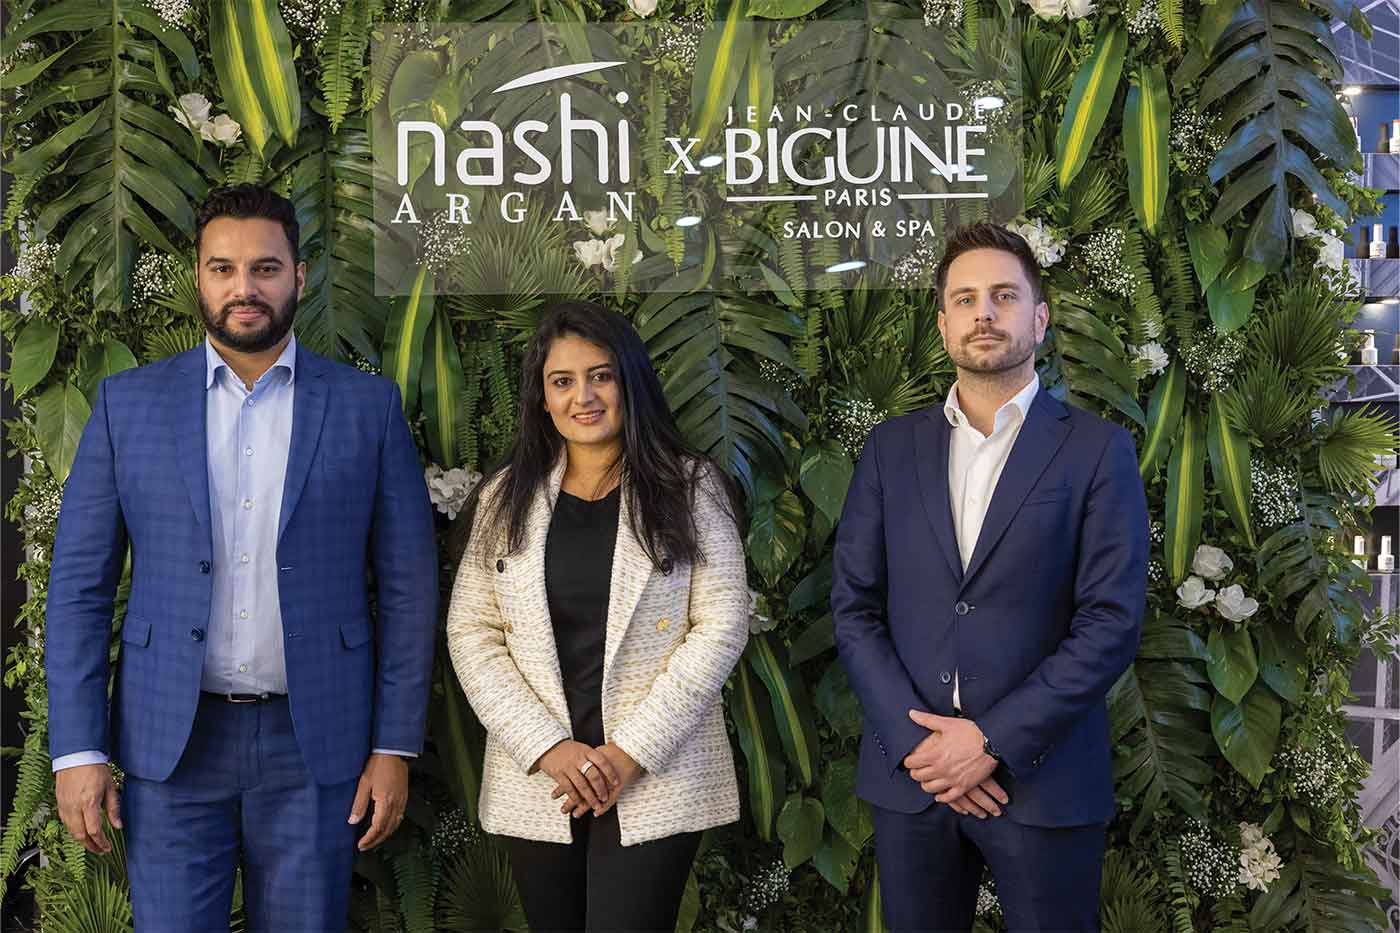 Nashi Argan collaborates with Jean-Claude Biguine